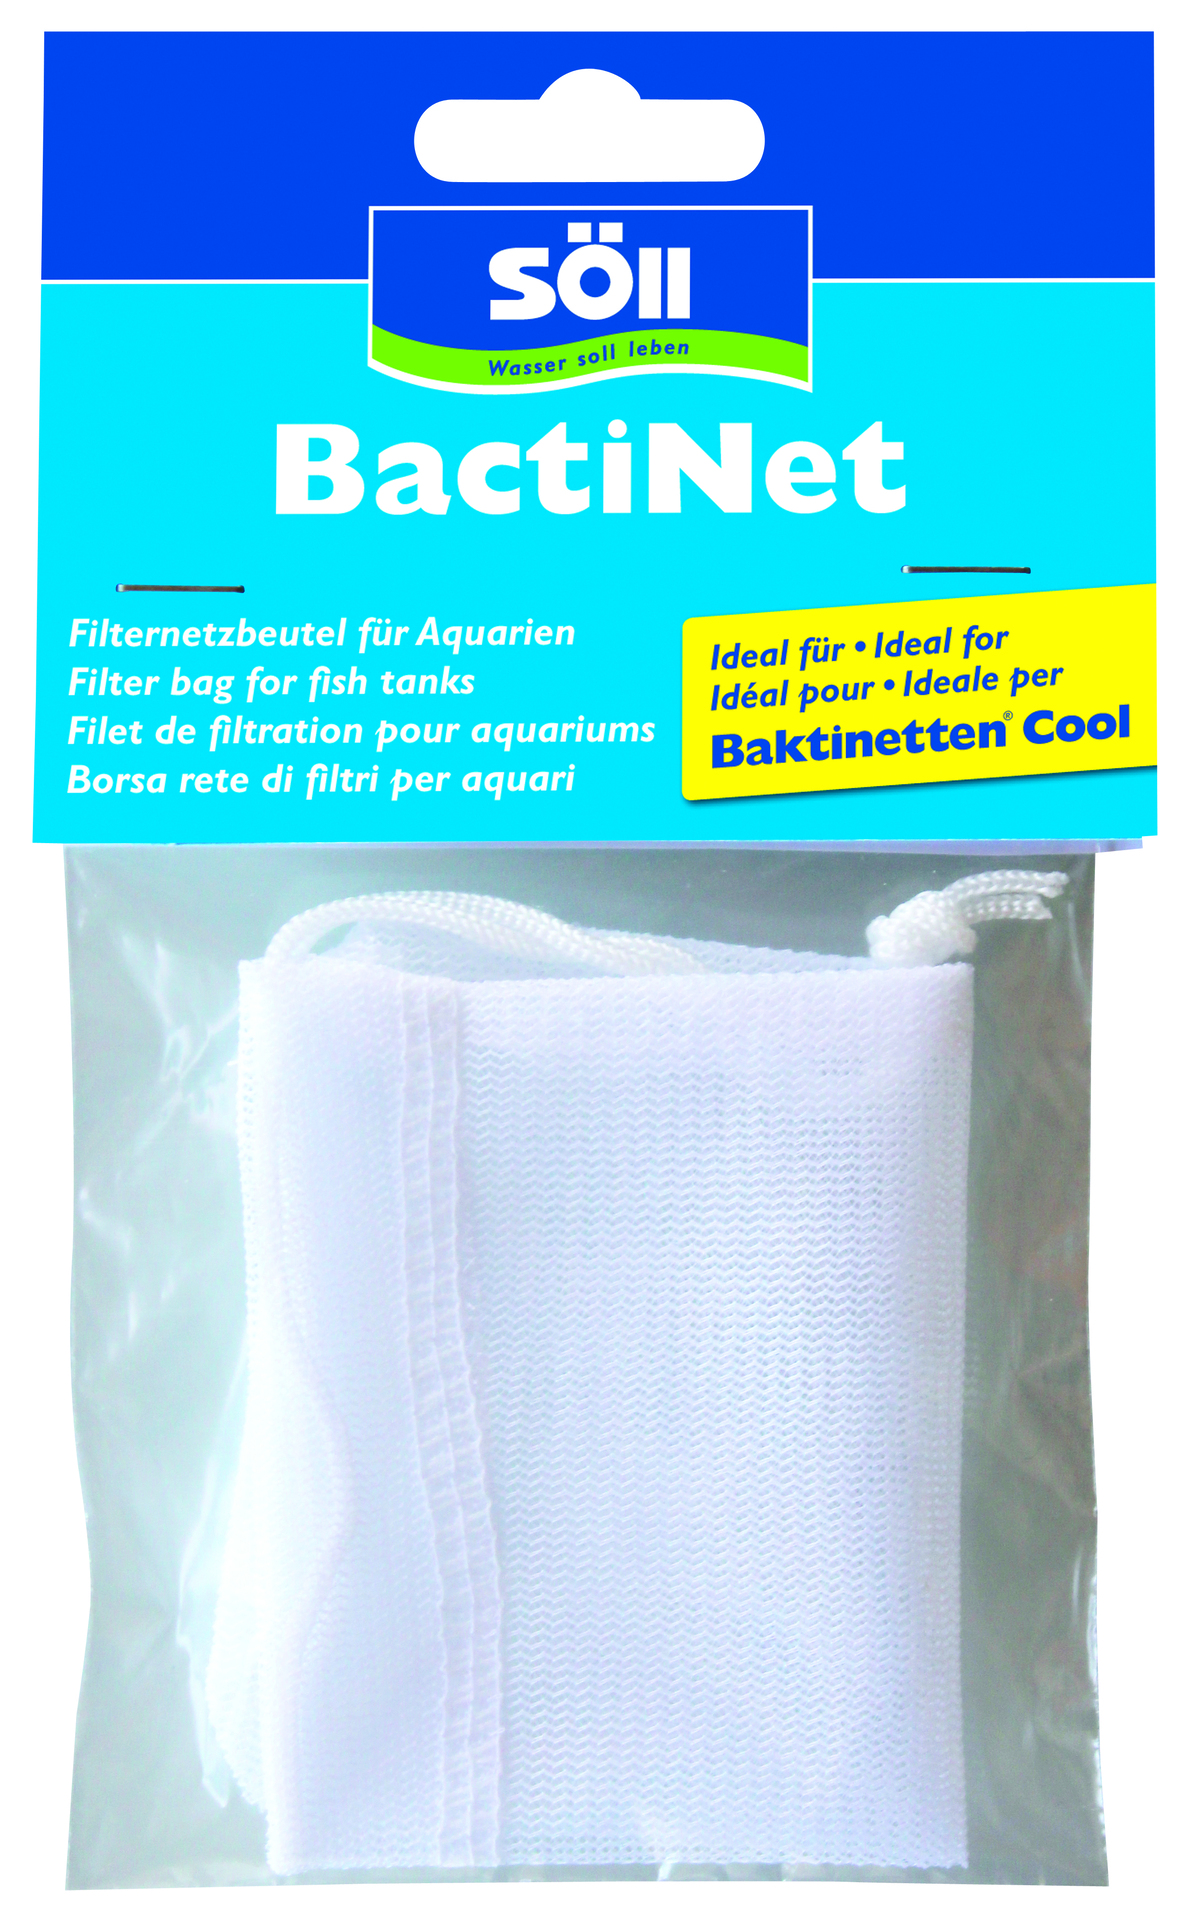 BactiNet 9 x 13 cm